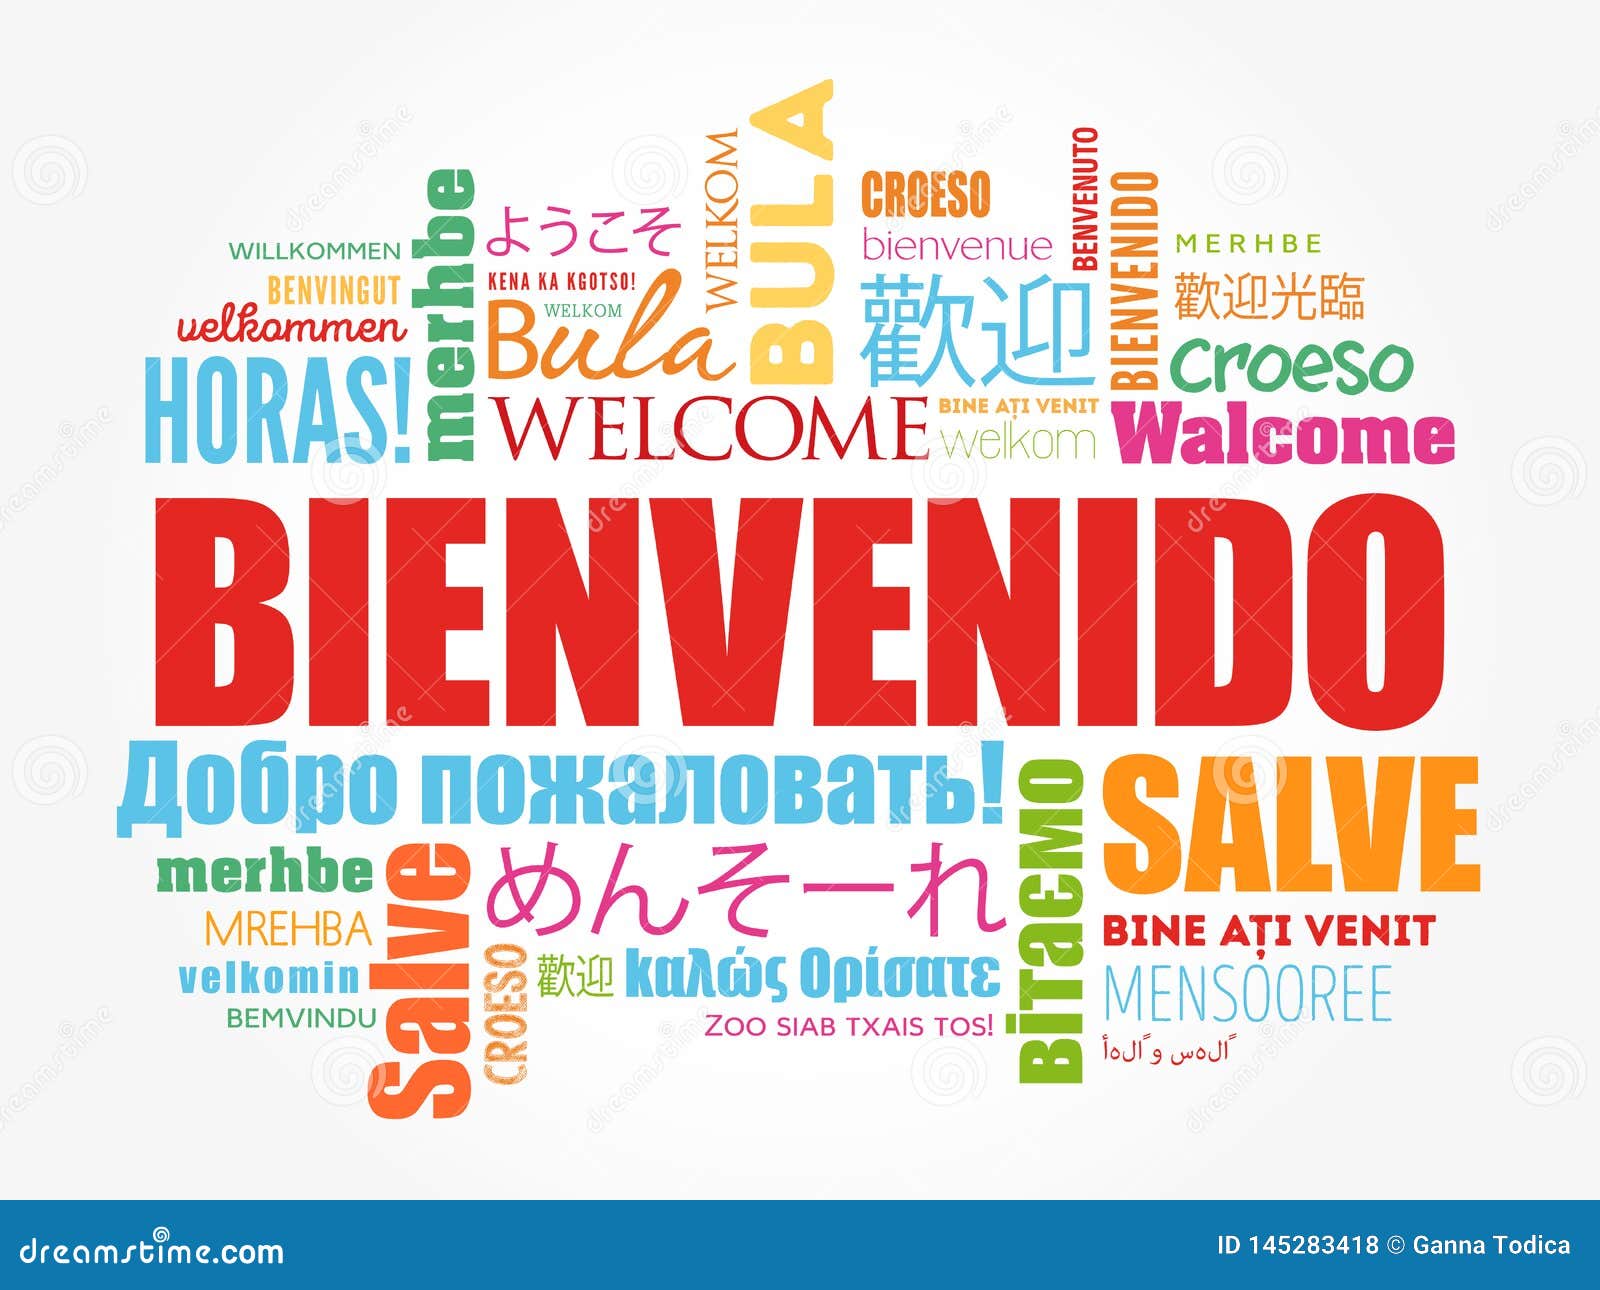 bienvenido , welcome in spanish